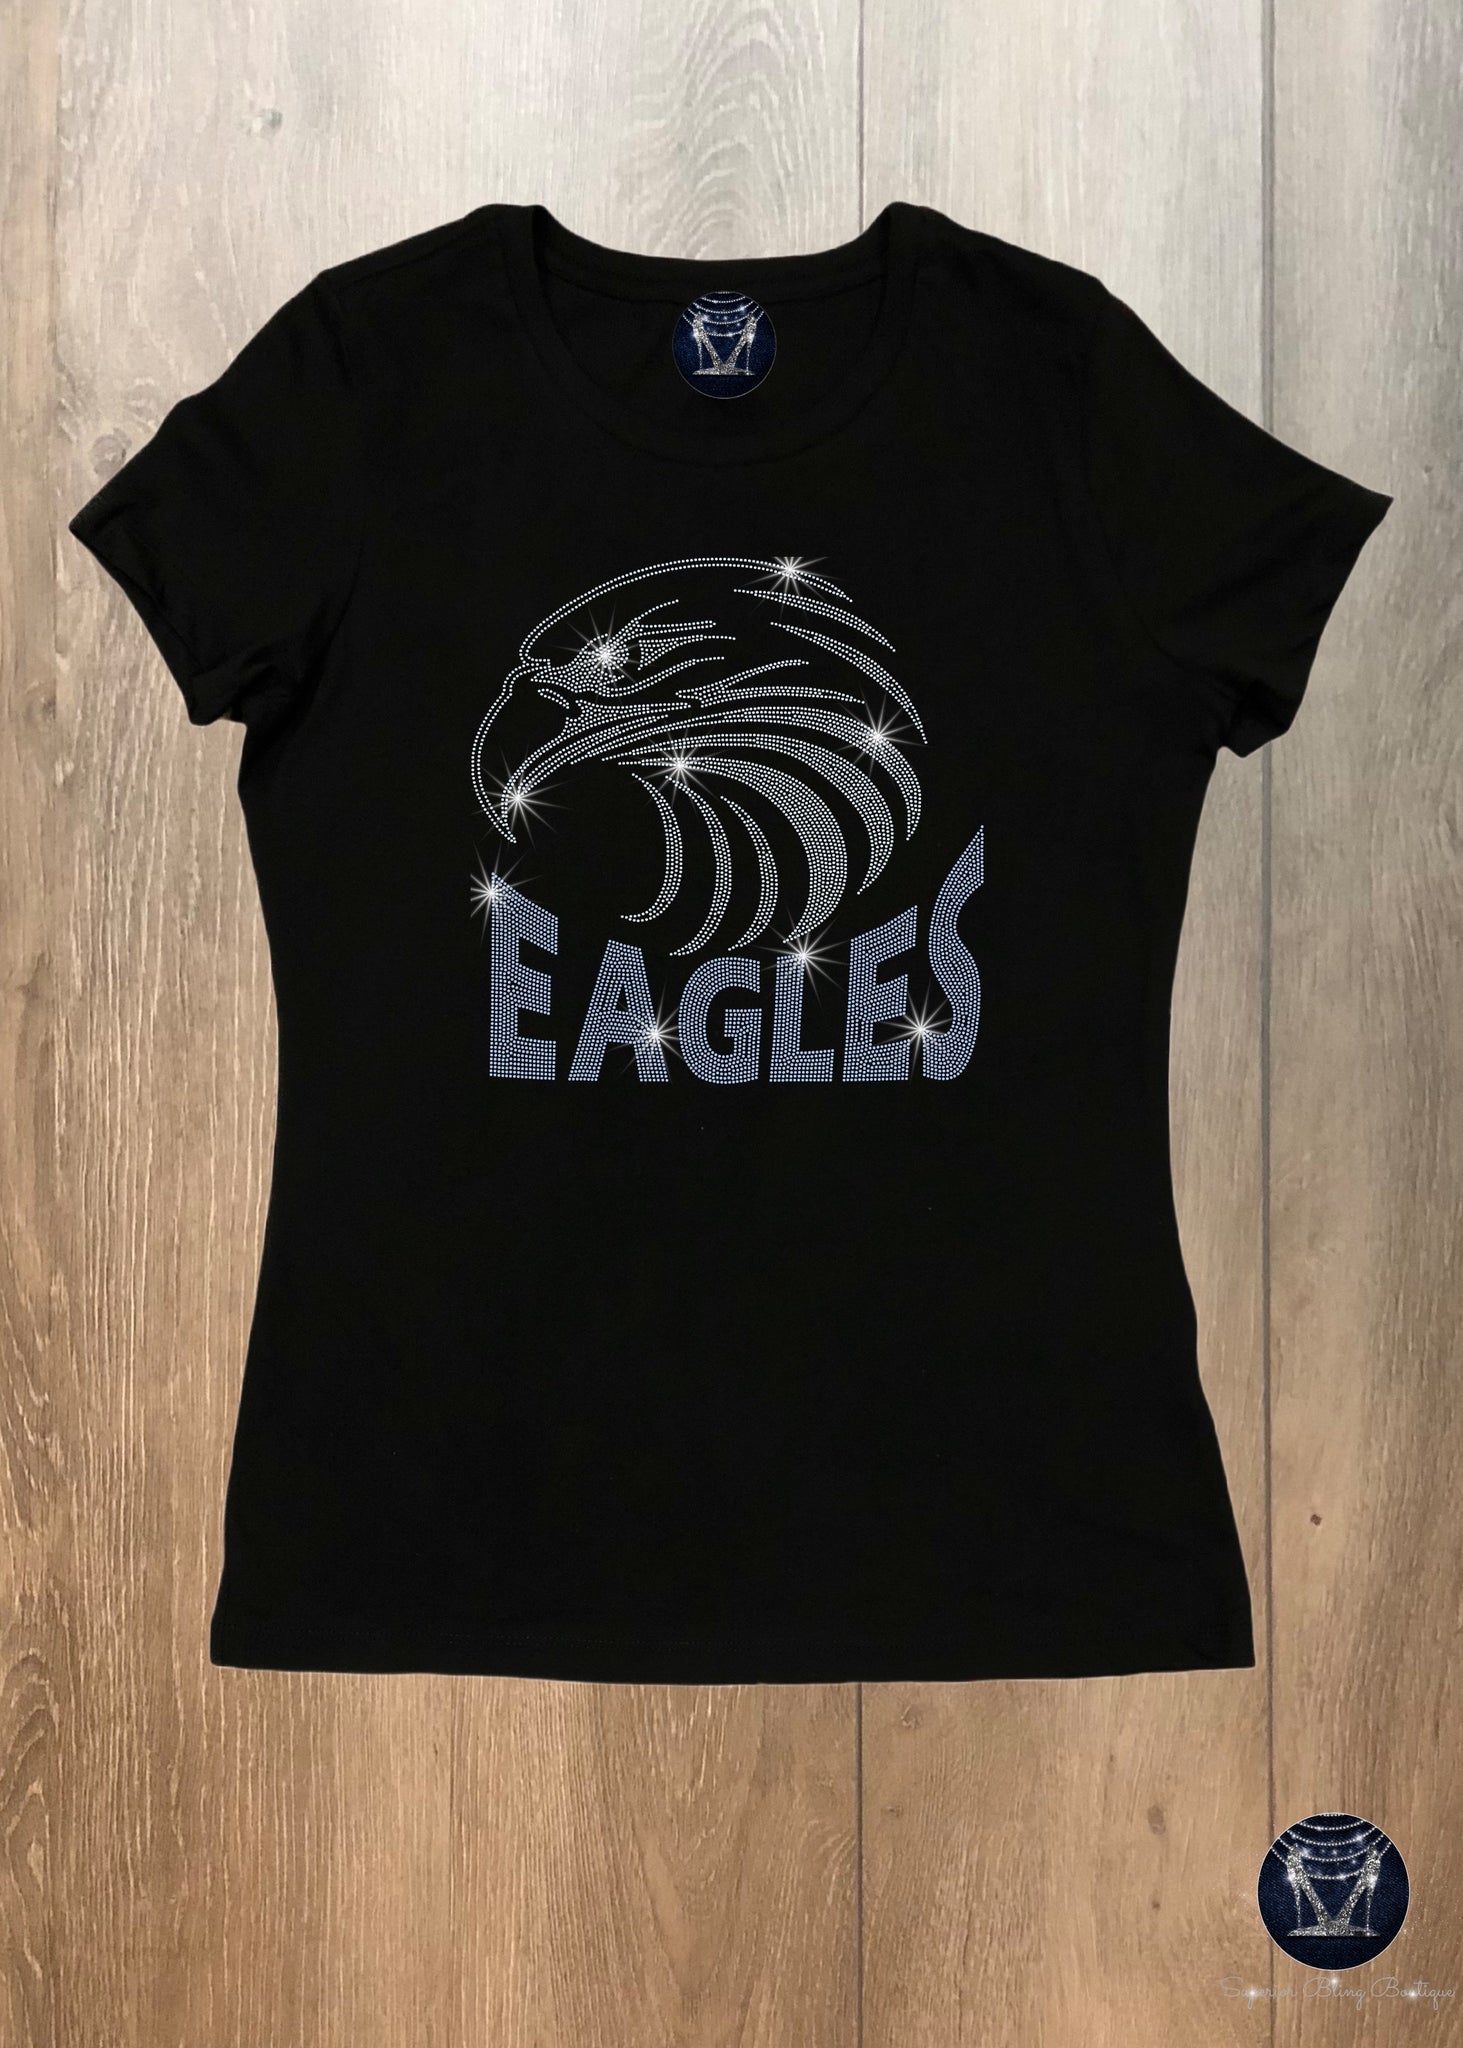 Eagles Mascot Bling Shirt